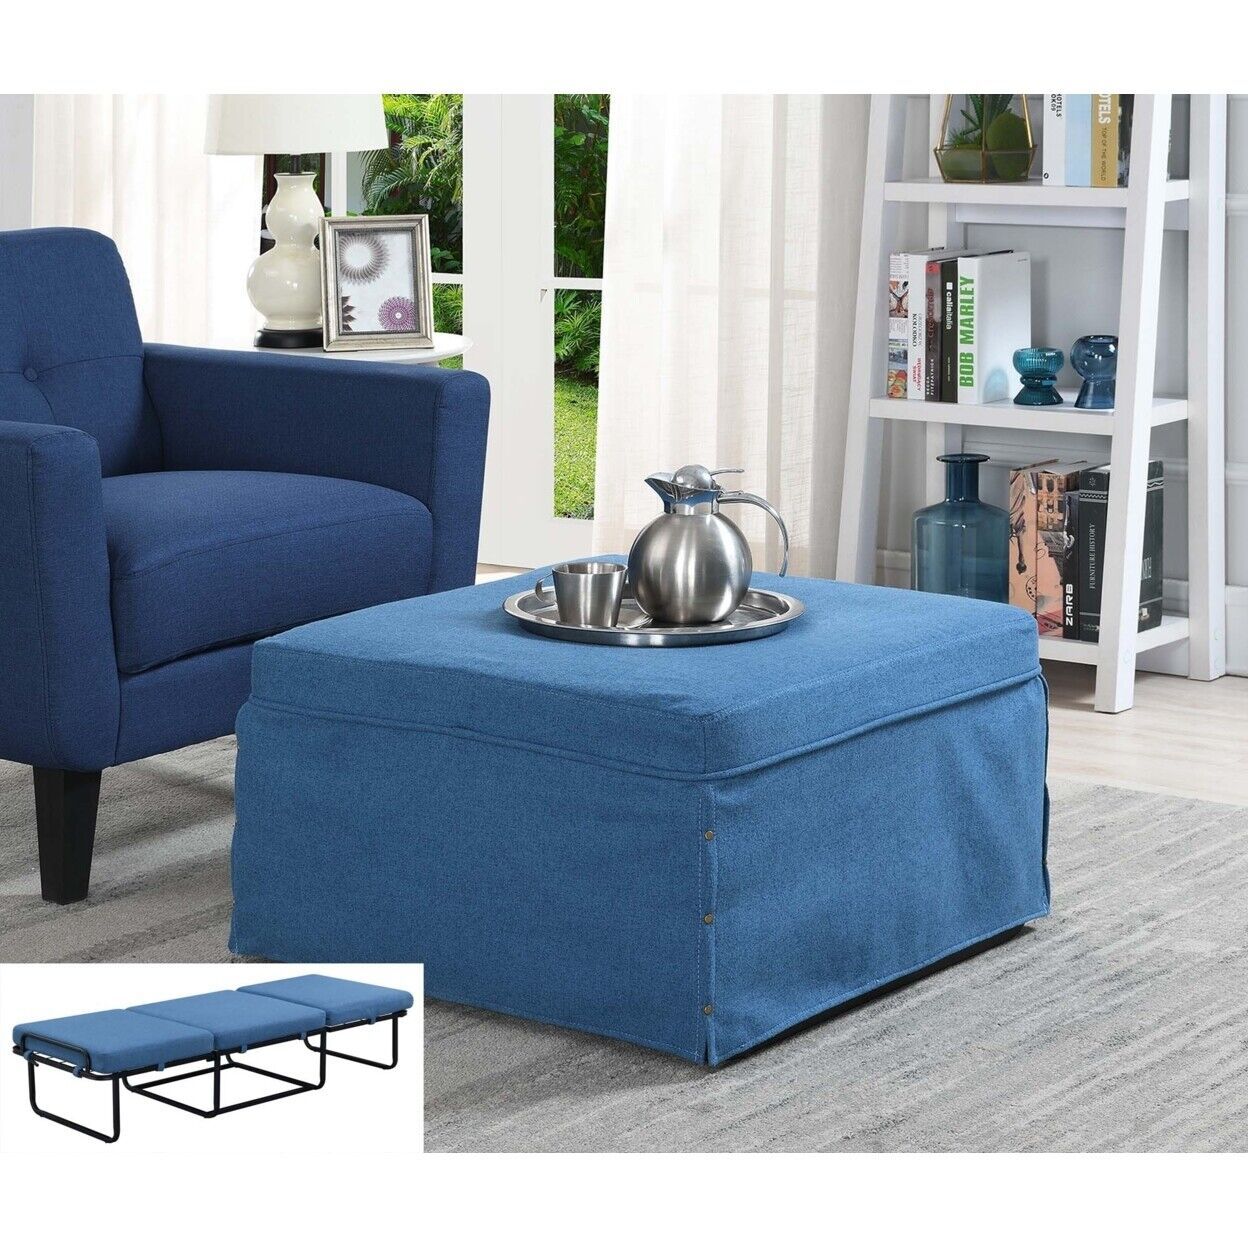 Designs4comfort Folding Bed Ottoman , Soft Blue Fabric 95285425273 | Ebay In Blue Folding Bed Ottomans (View 9 of 15)